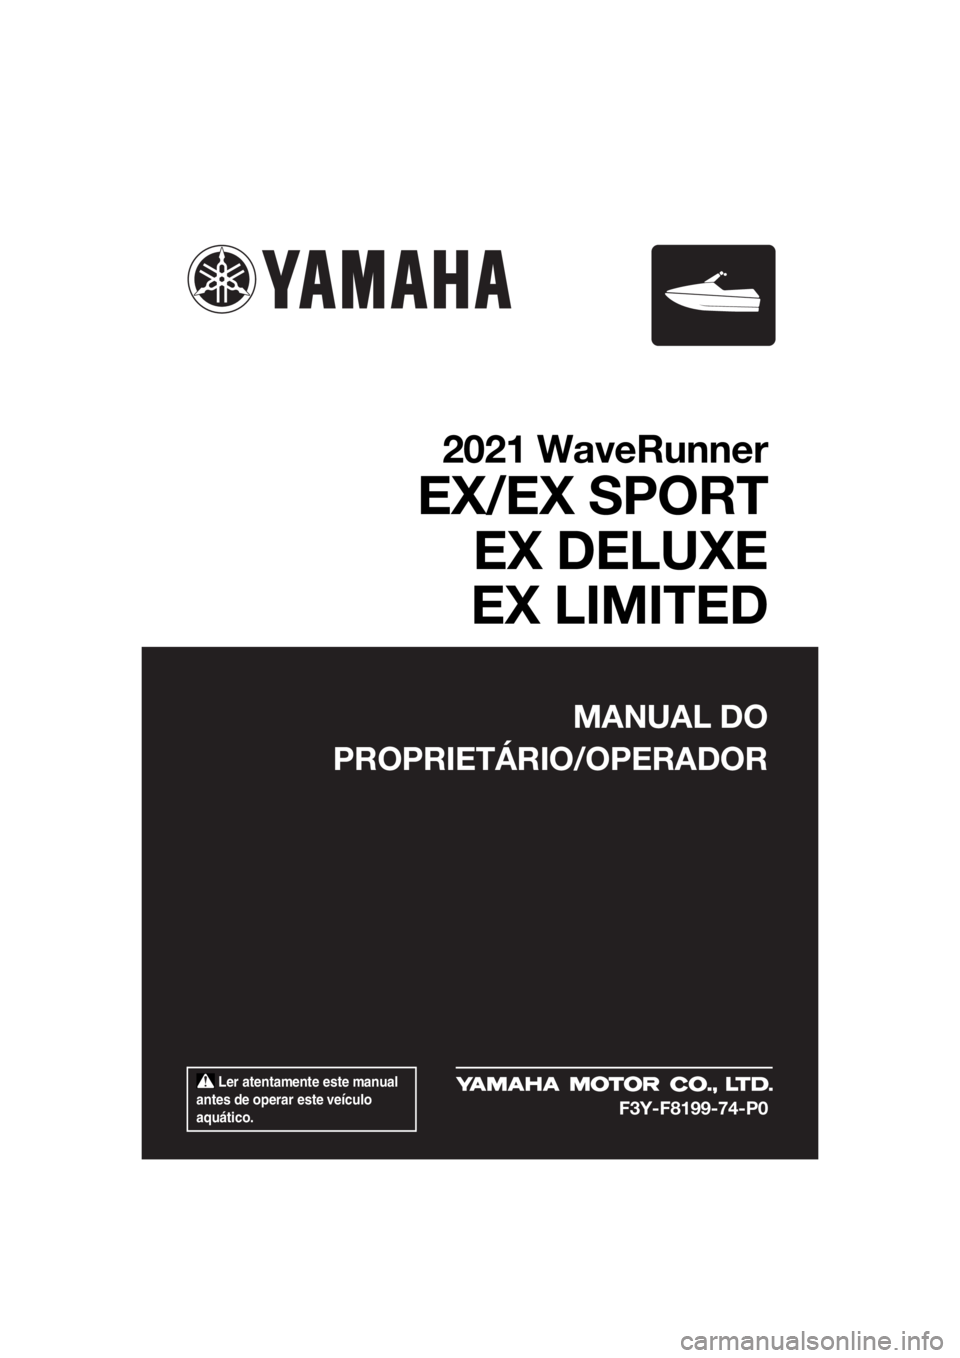 YAMAHA EX DELUXE 2021  Manual de utilização (in Portuguese)  Ler atentamente este manual 
antes de operar este veículo 
aquático.
MANUAL DO
PROPRIETÁRIO/OPERADOR
2021 WaveRunner
EX/EX SPORT EX DELUXE
EX LIMITED
F3Y-F8199-74-P0
UF3Y74P0.book  Page 1  Tuesday